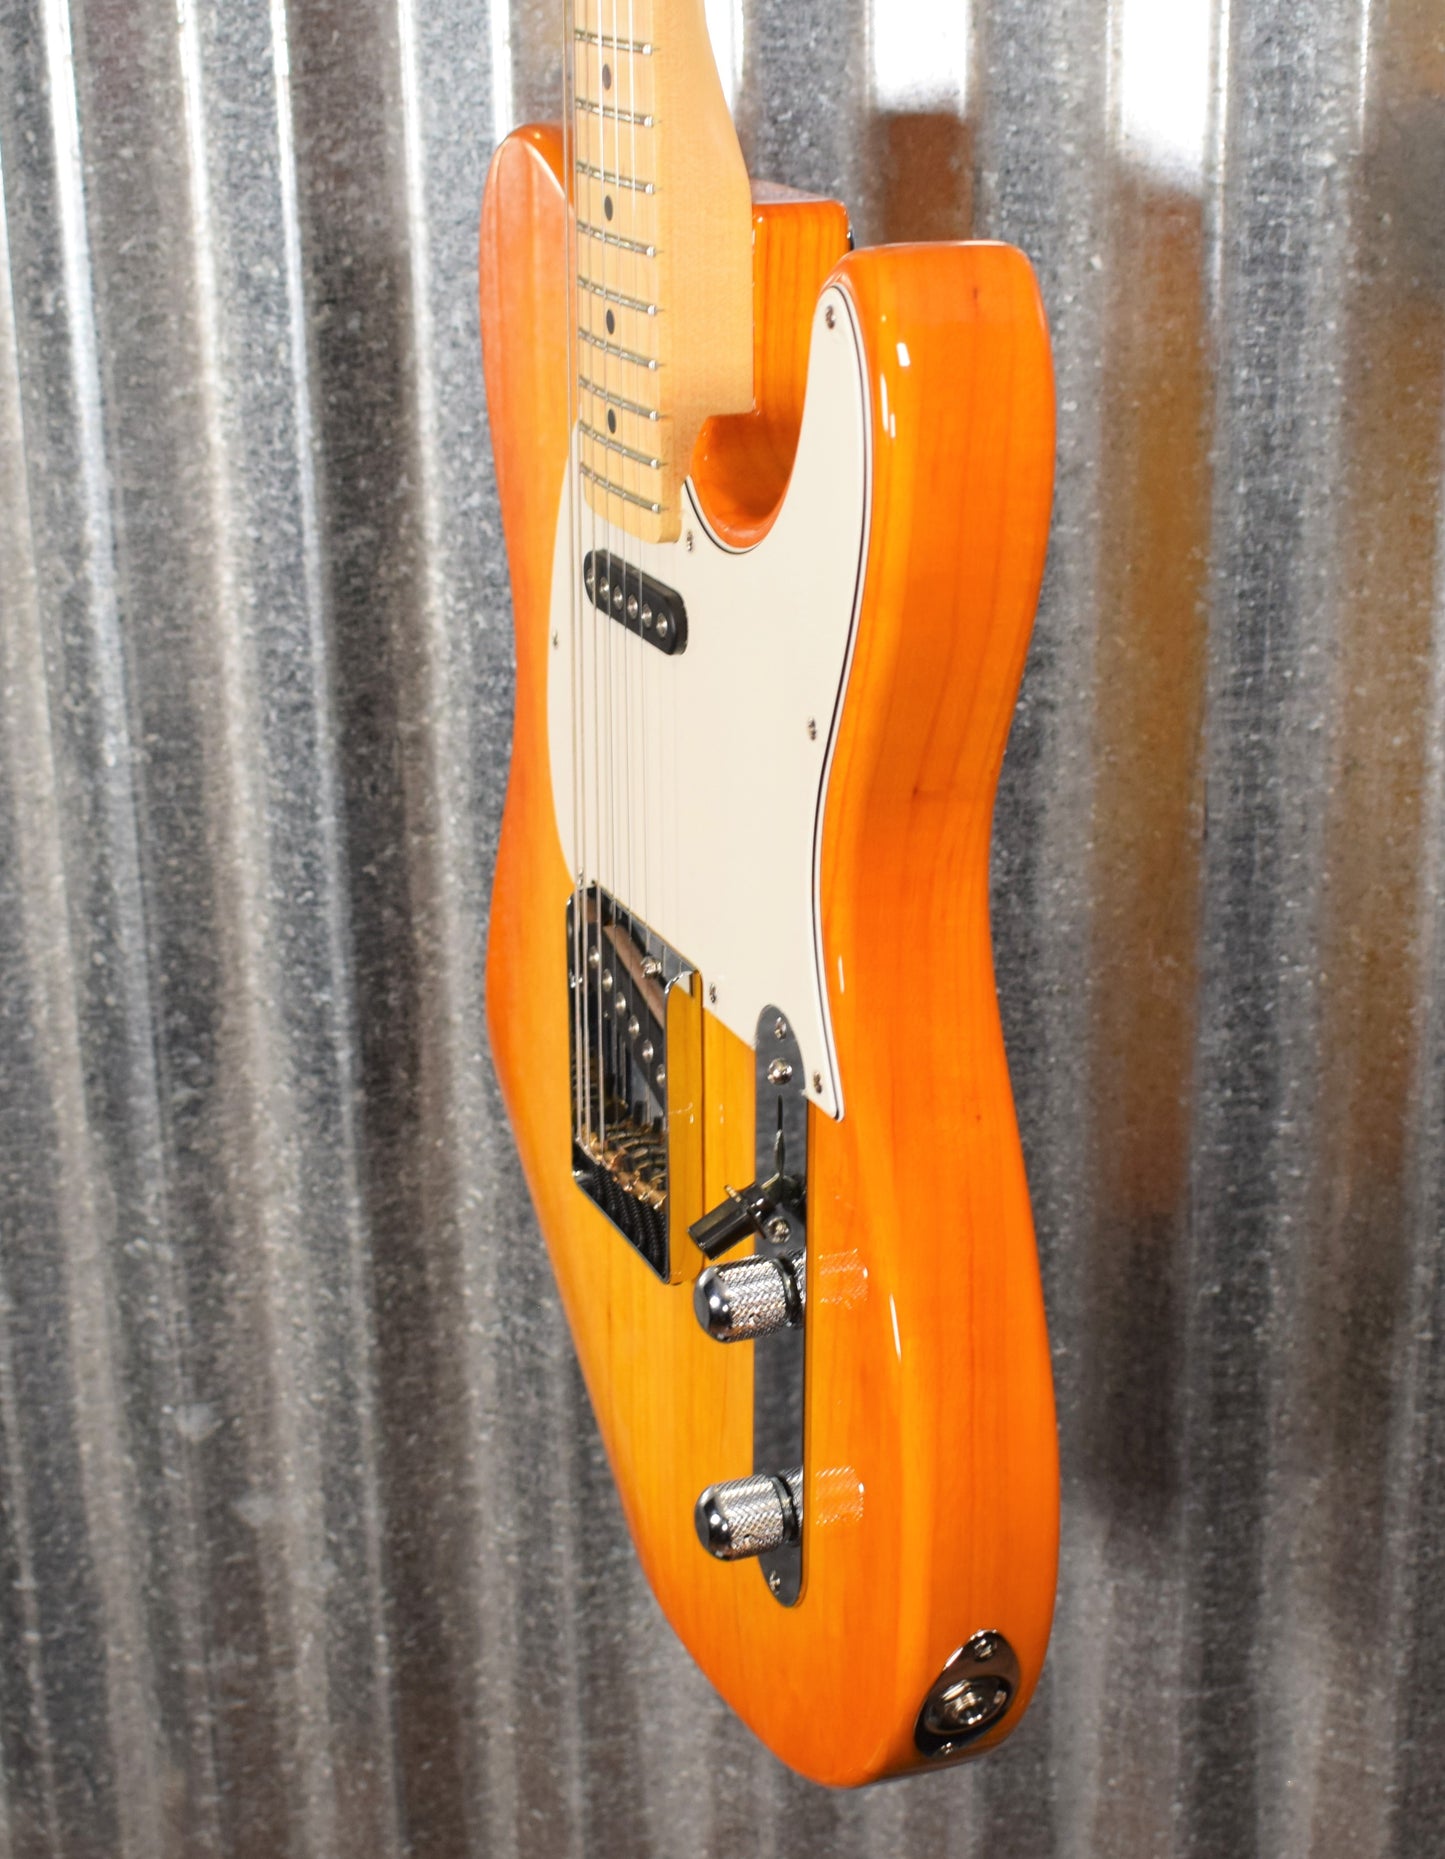 G&L USA  ASAT Classic Honeyburst Maple Satin Neck Guitar & Case #5215